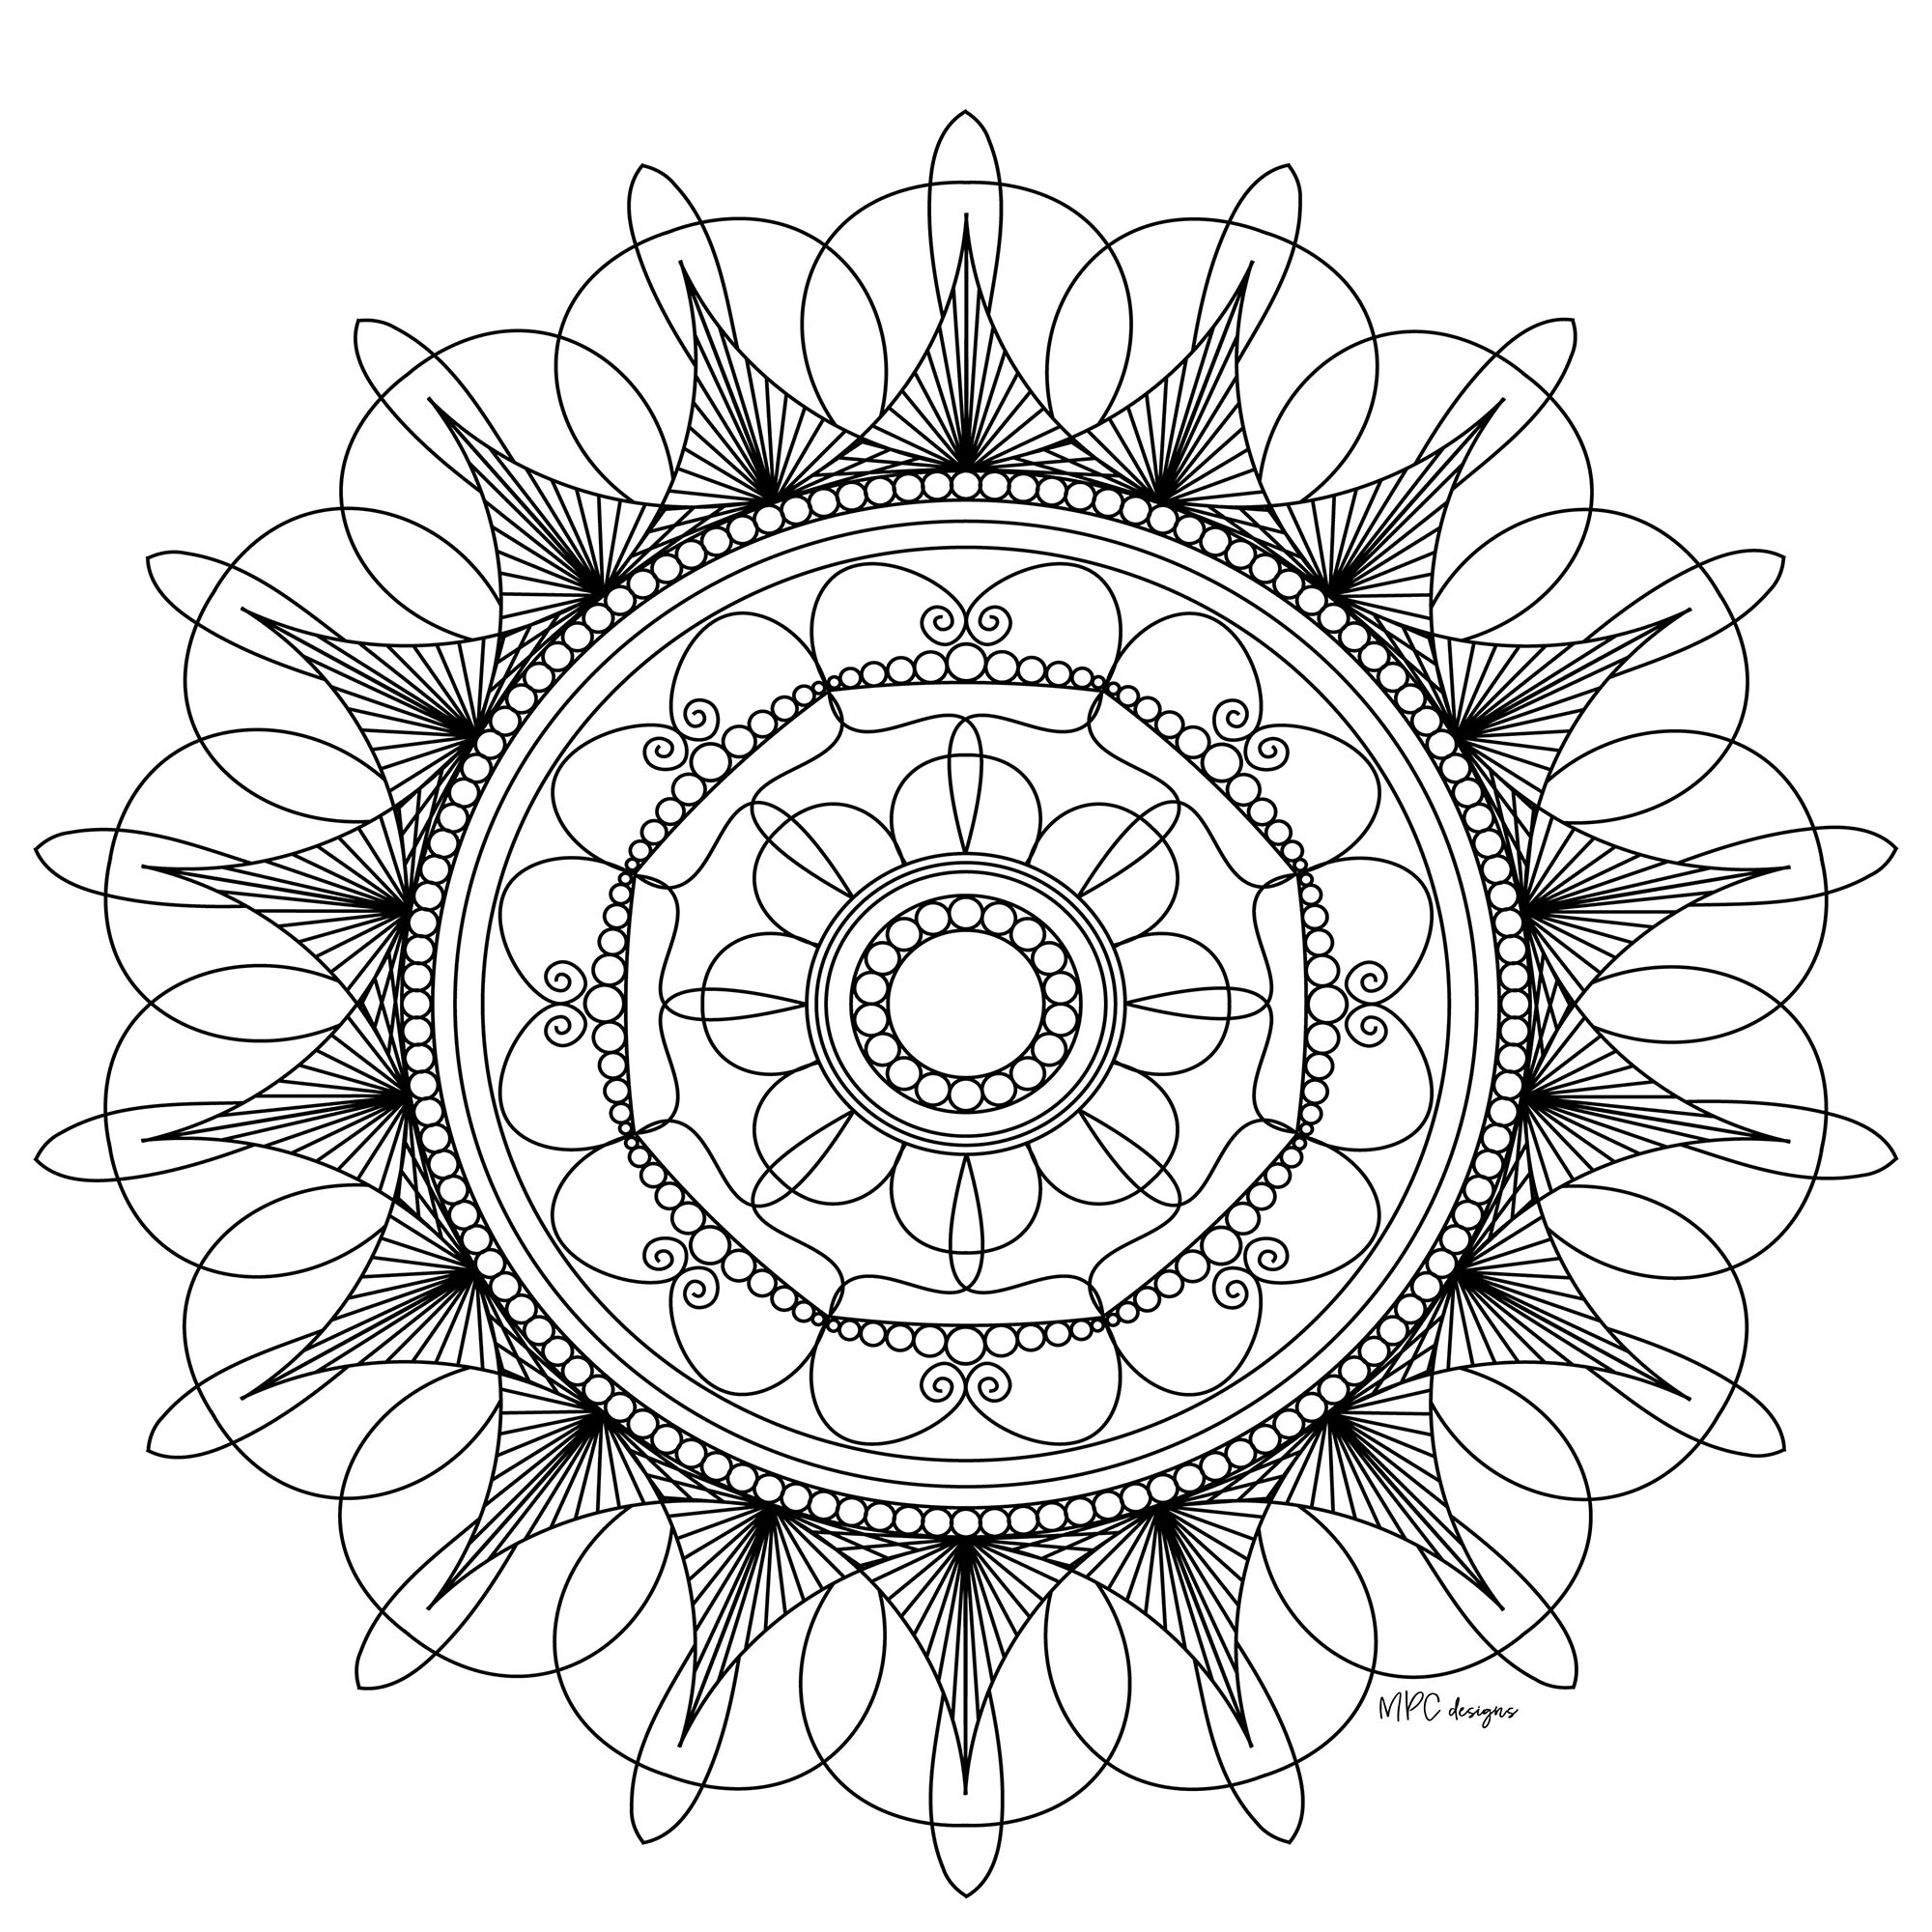 Mandala with pearls, Artist : MPC Design